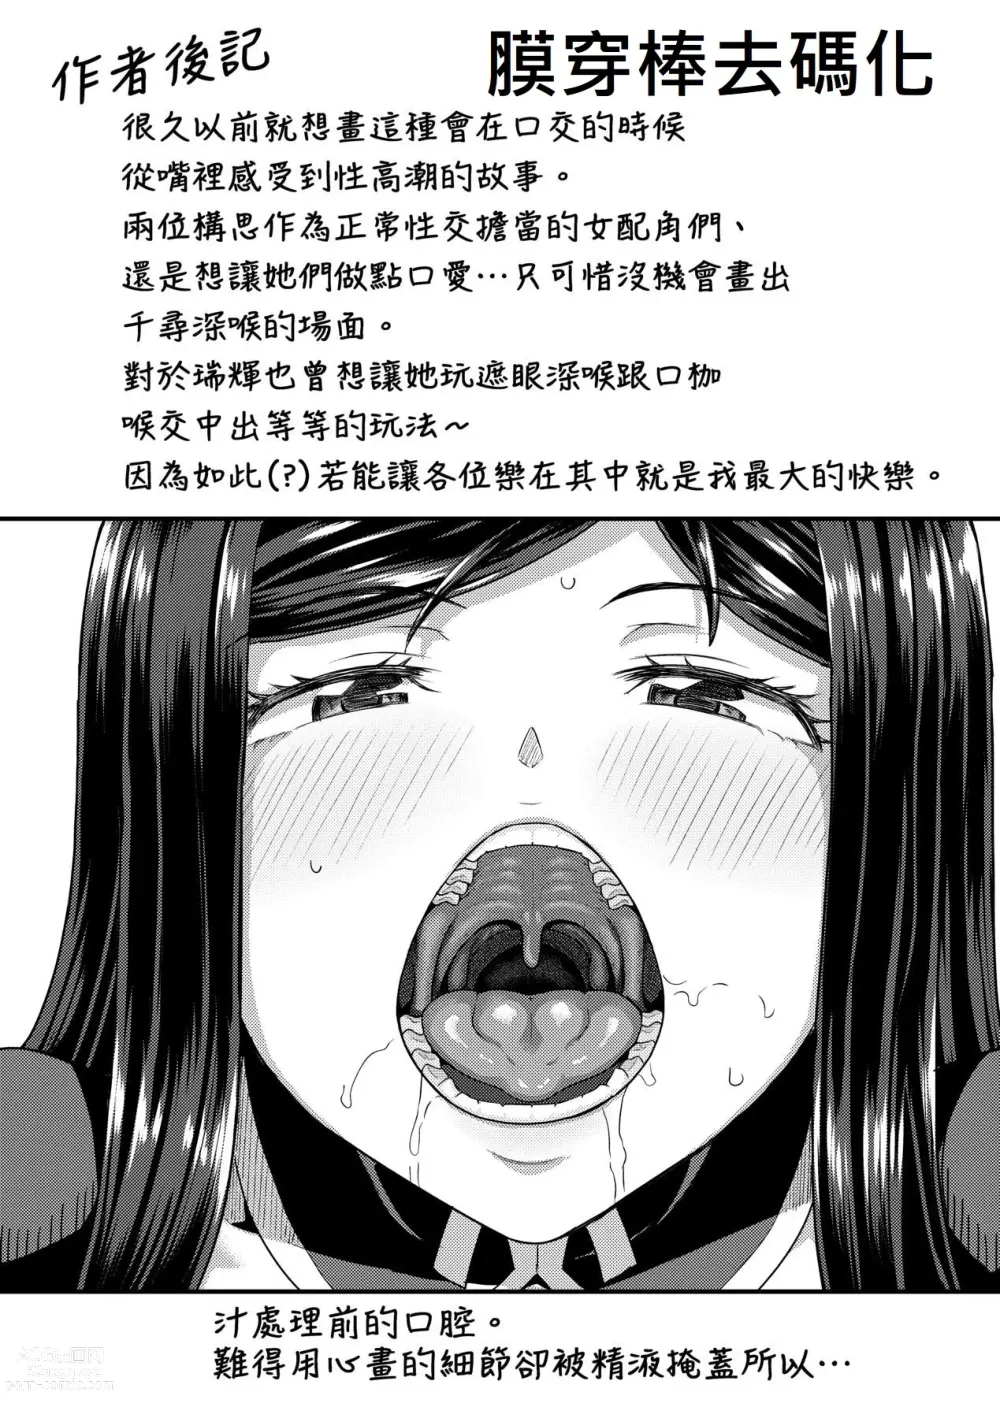 Page 214 of manga 青梅竹馬是我的專屬口愛女僕 (decensored)